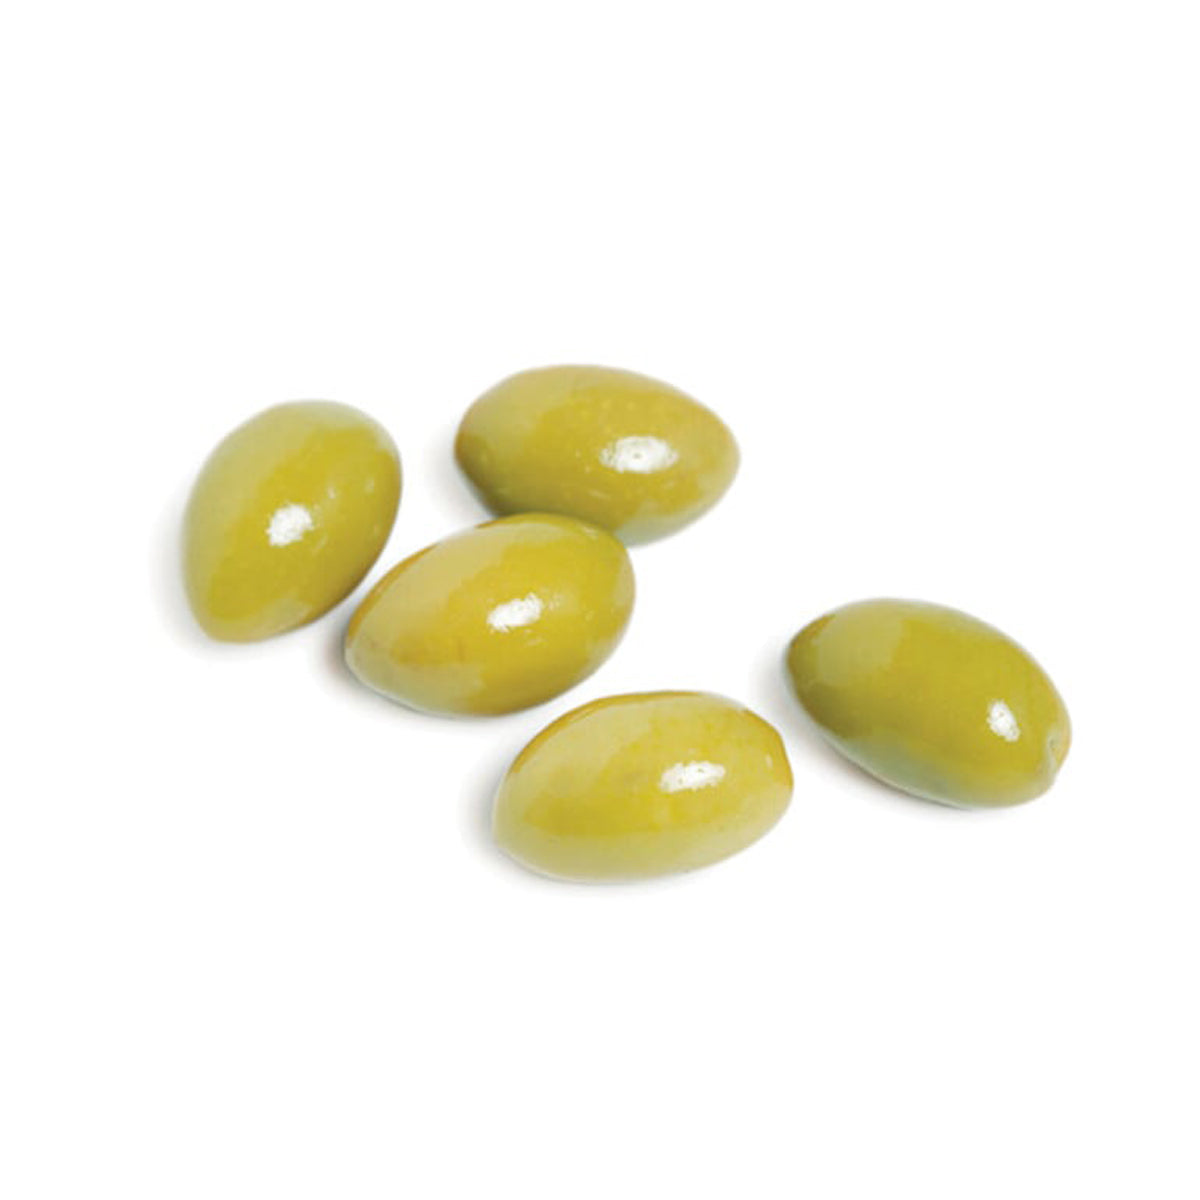 Foodmatch Picholine Olives 2.2 LB